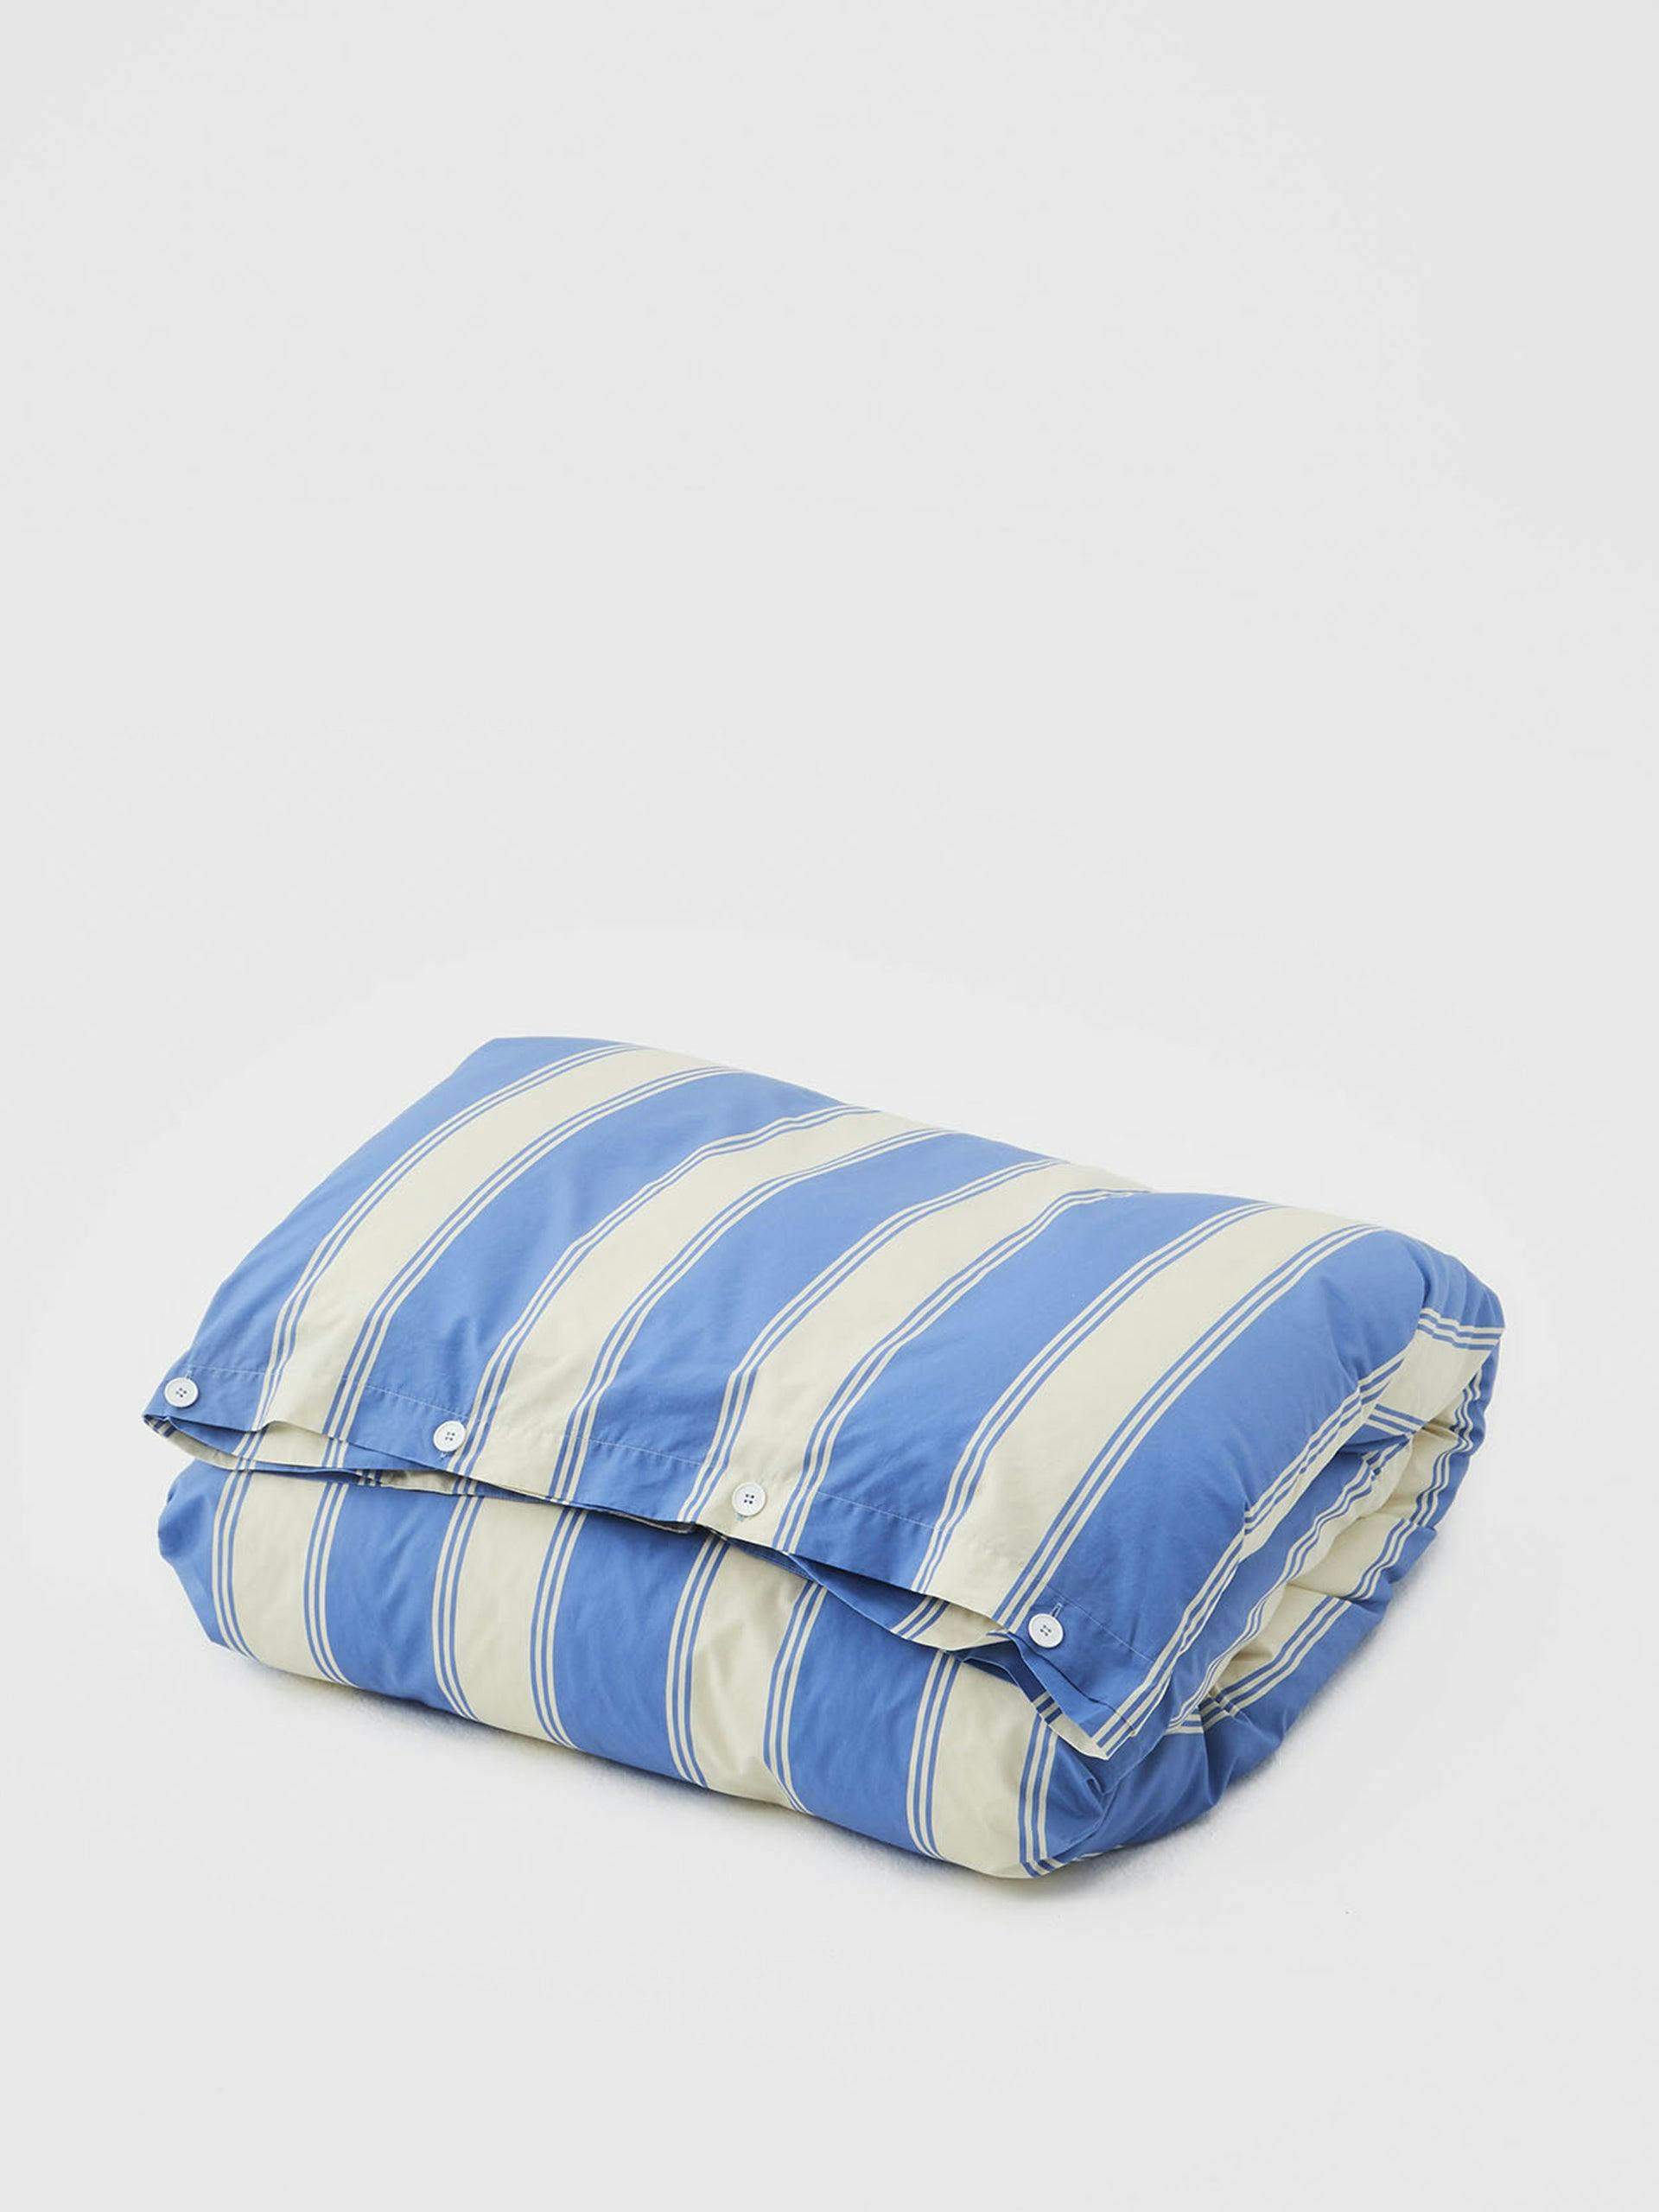 Striped cotton bedding